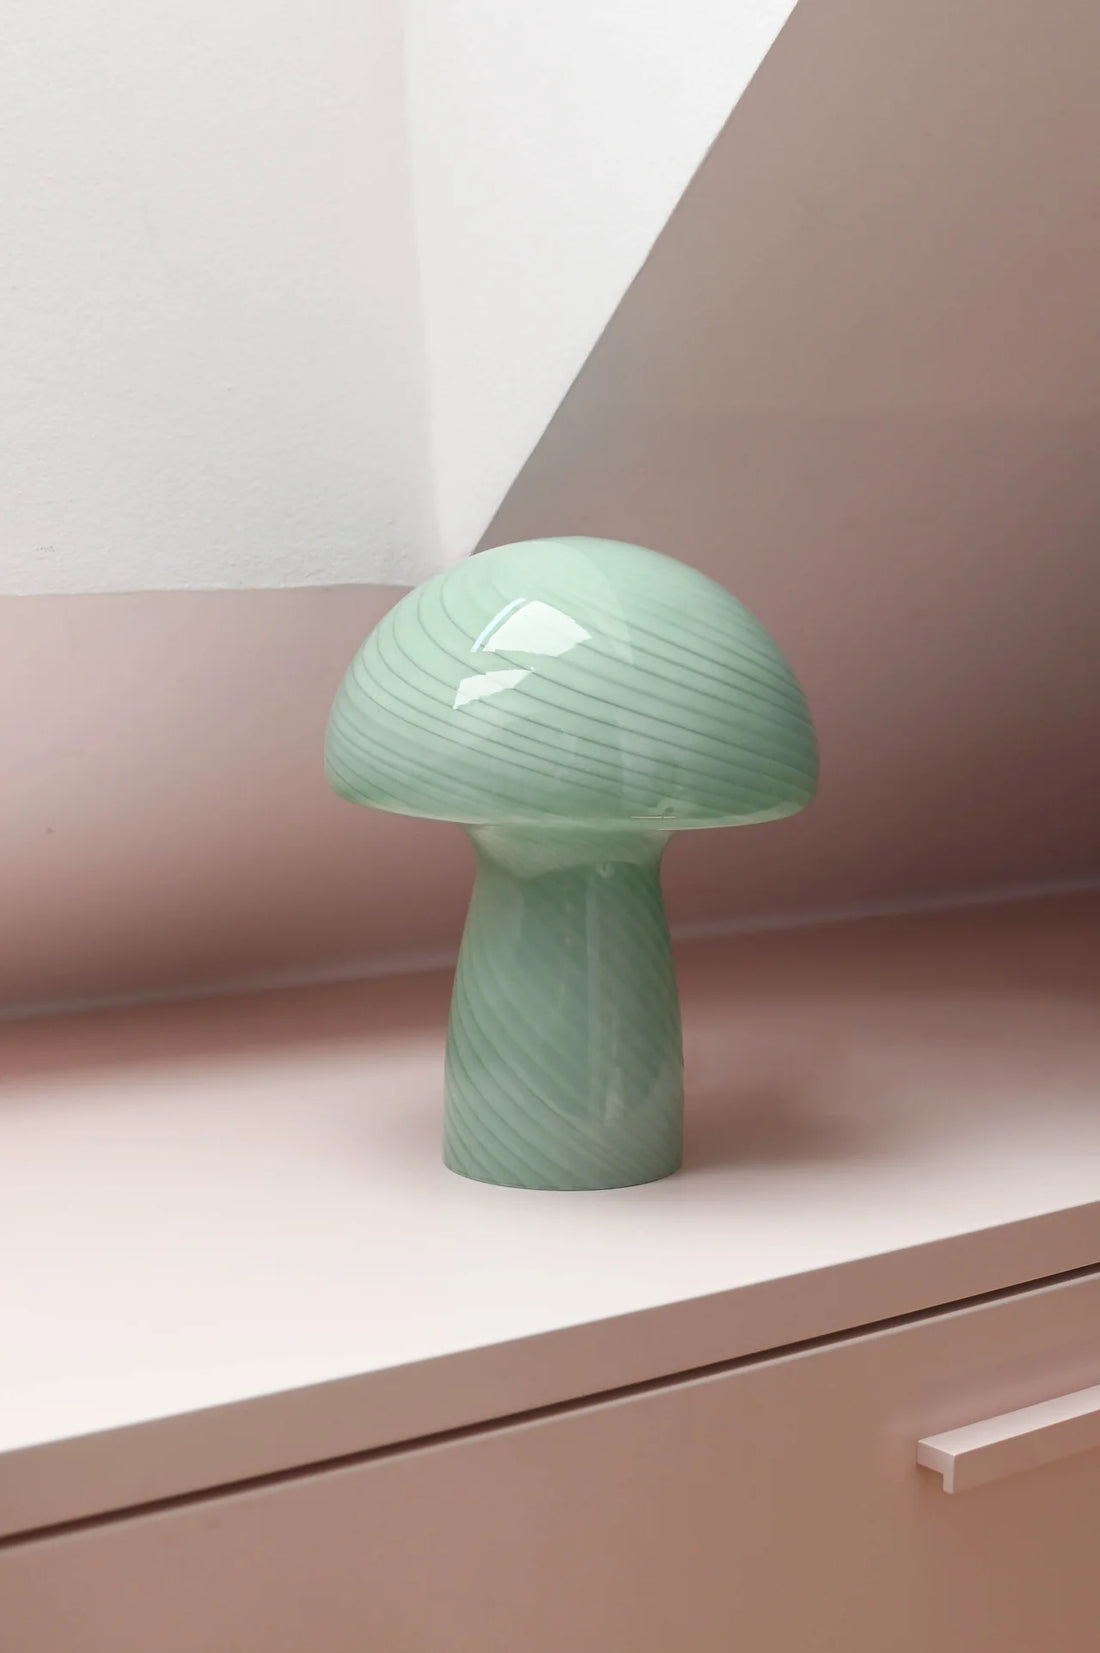 Bahne - Svampelampe / Mushroom bordlampe, mint - H23 cm.